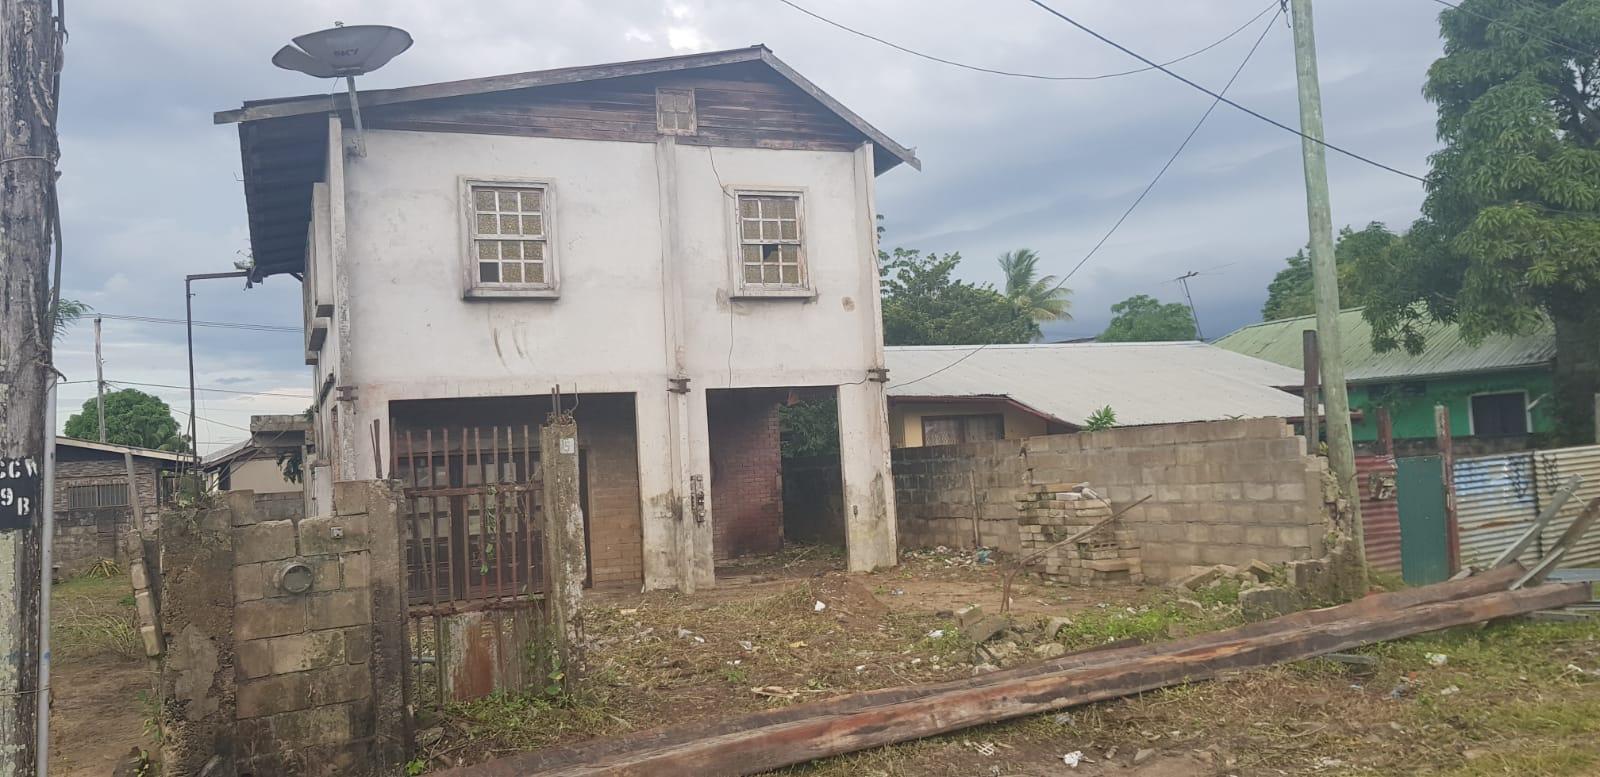 Il breuk Misverstand Huis Kopen in Suriname